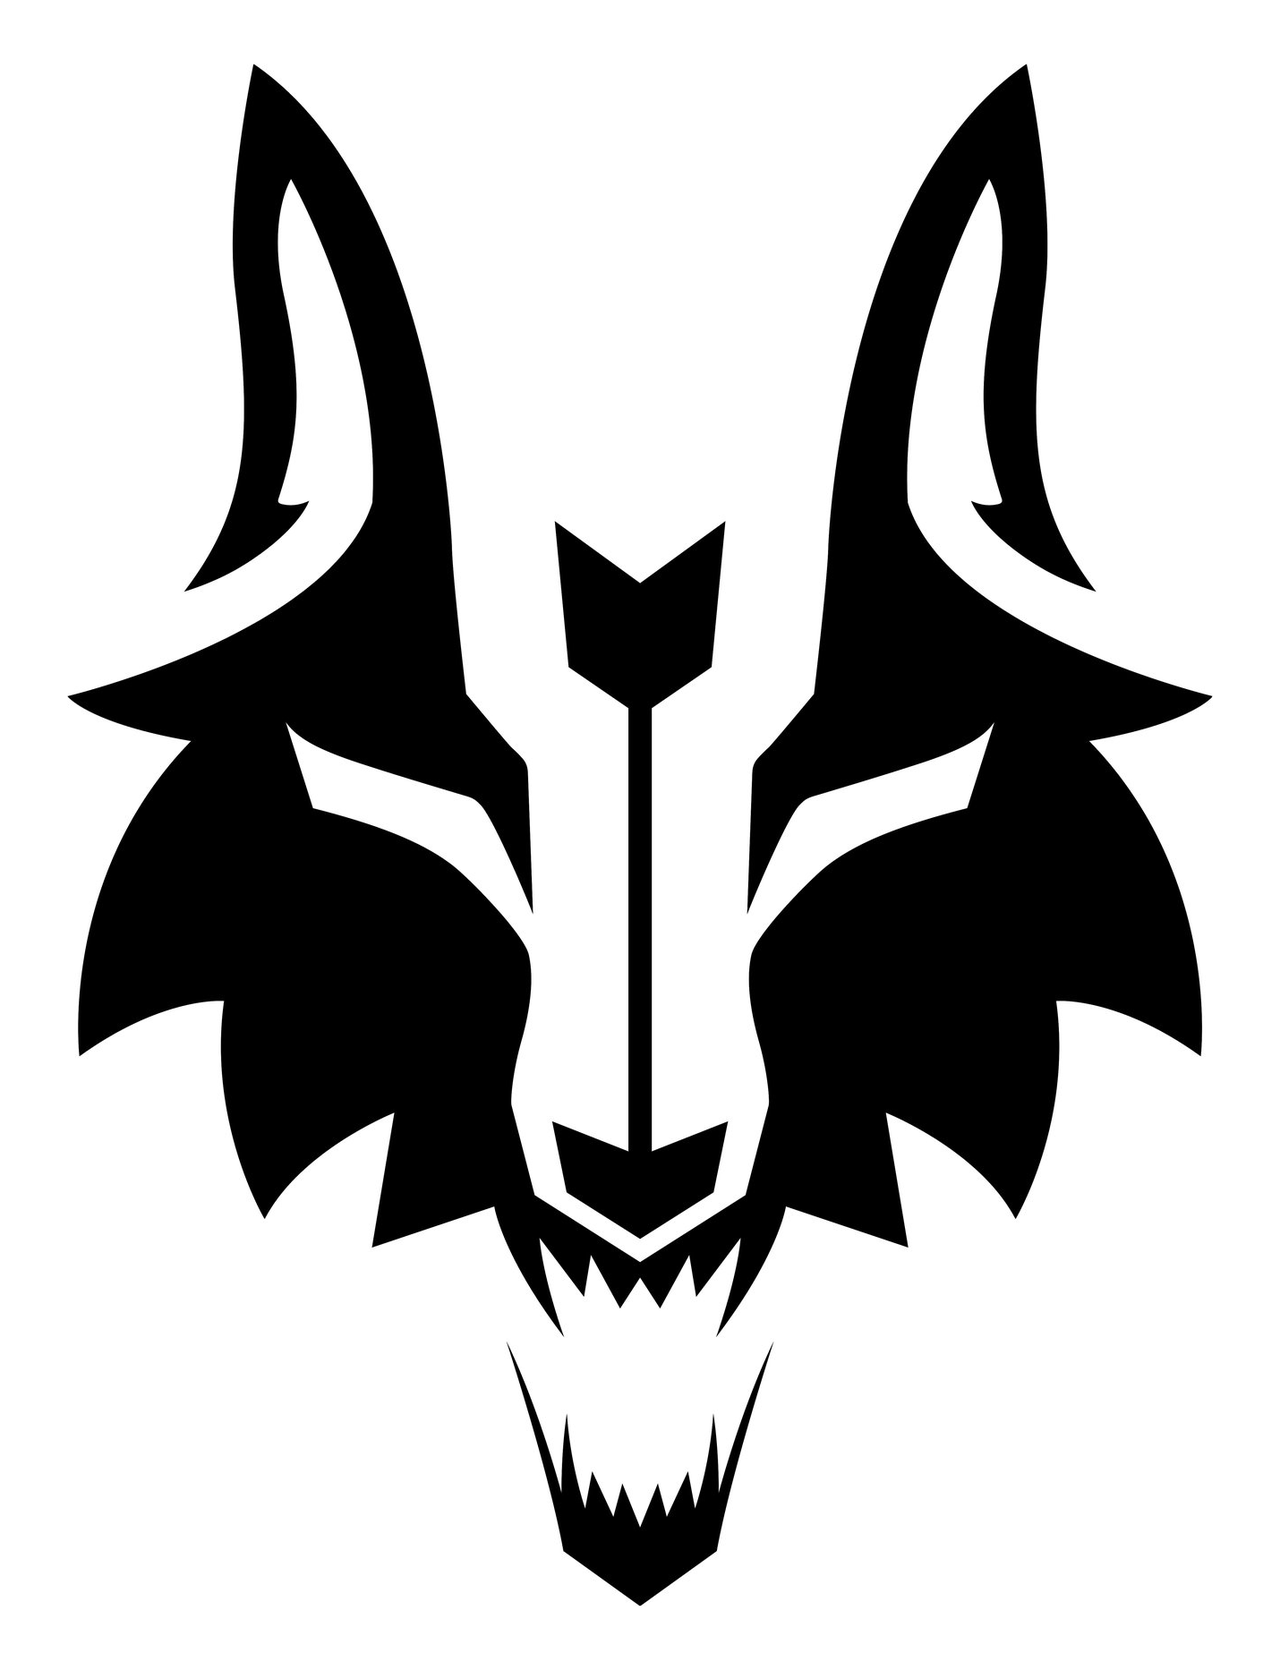 Guara wolf archery logo by Andres-Bazan on DeviantArt